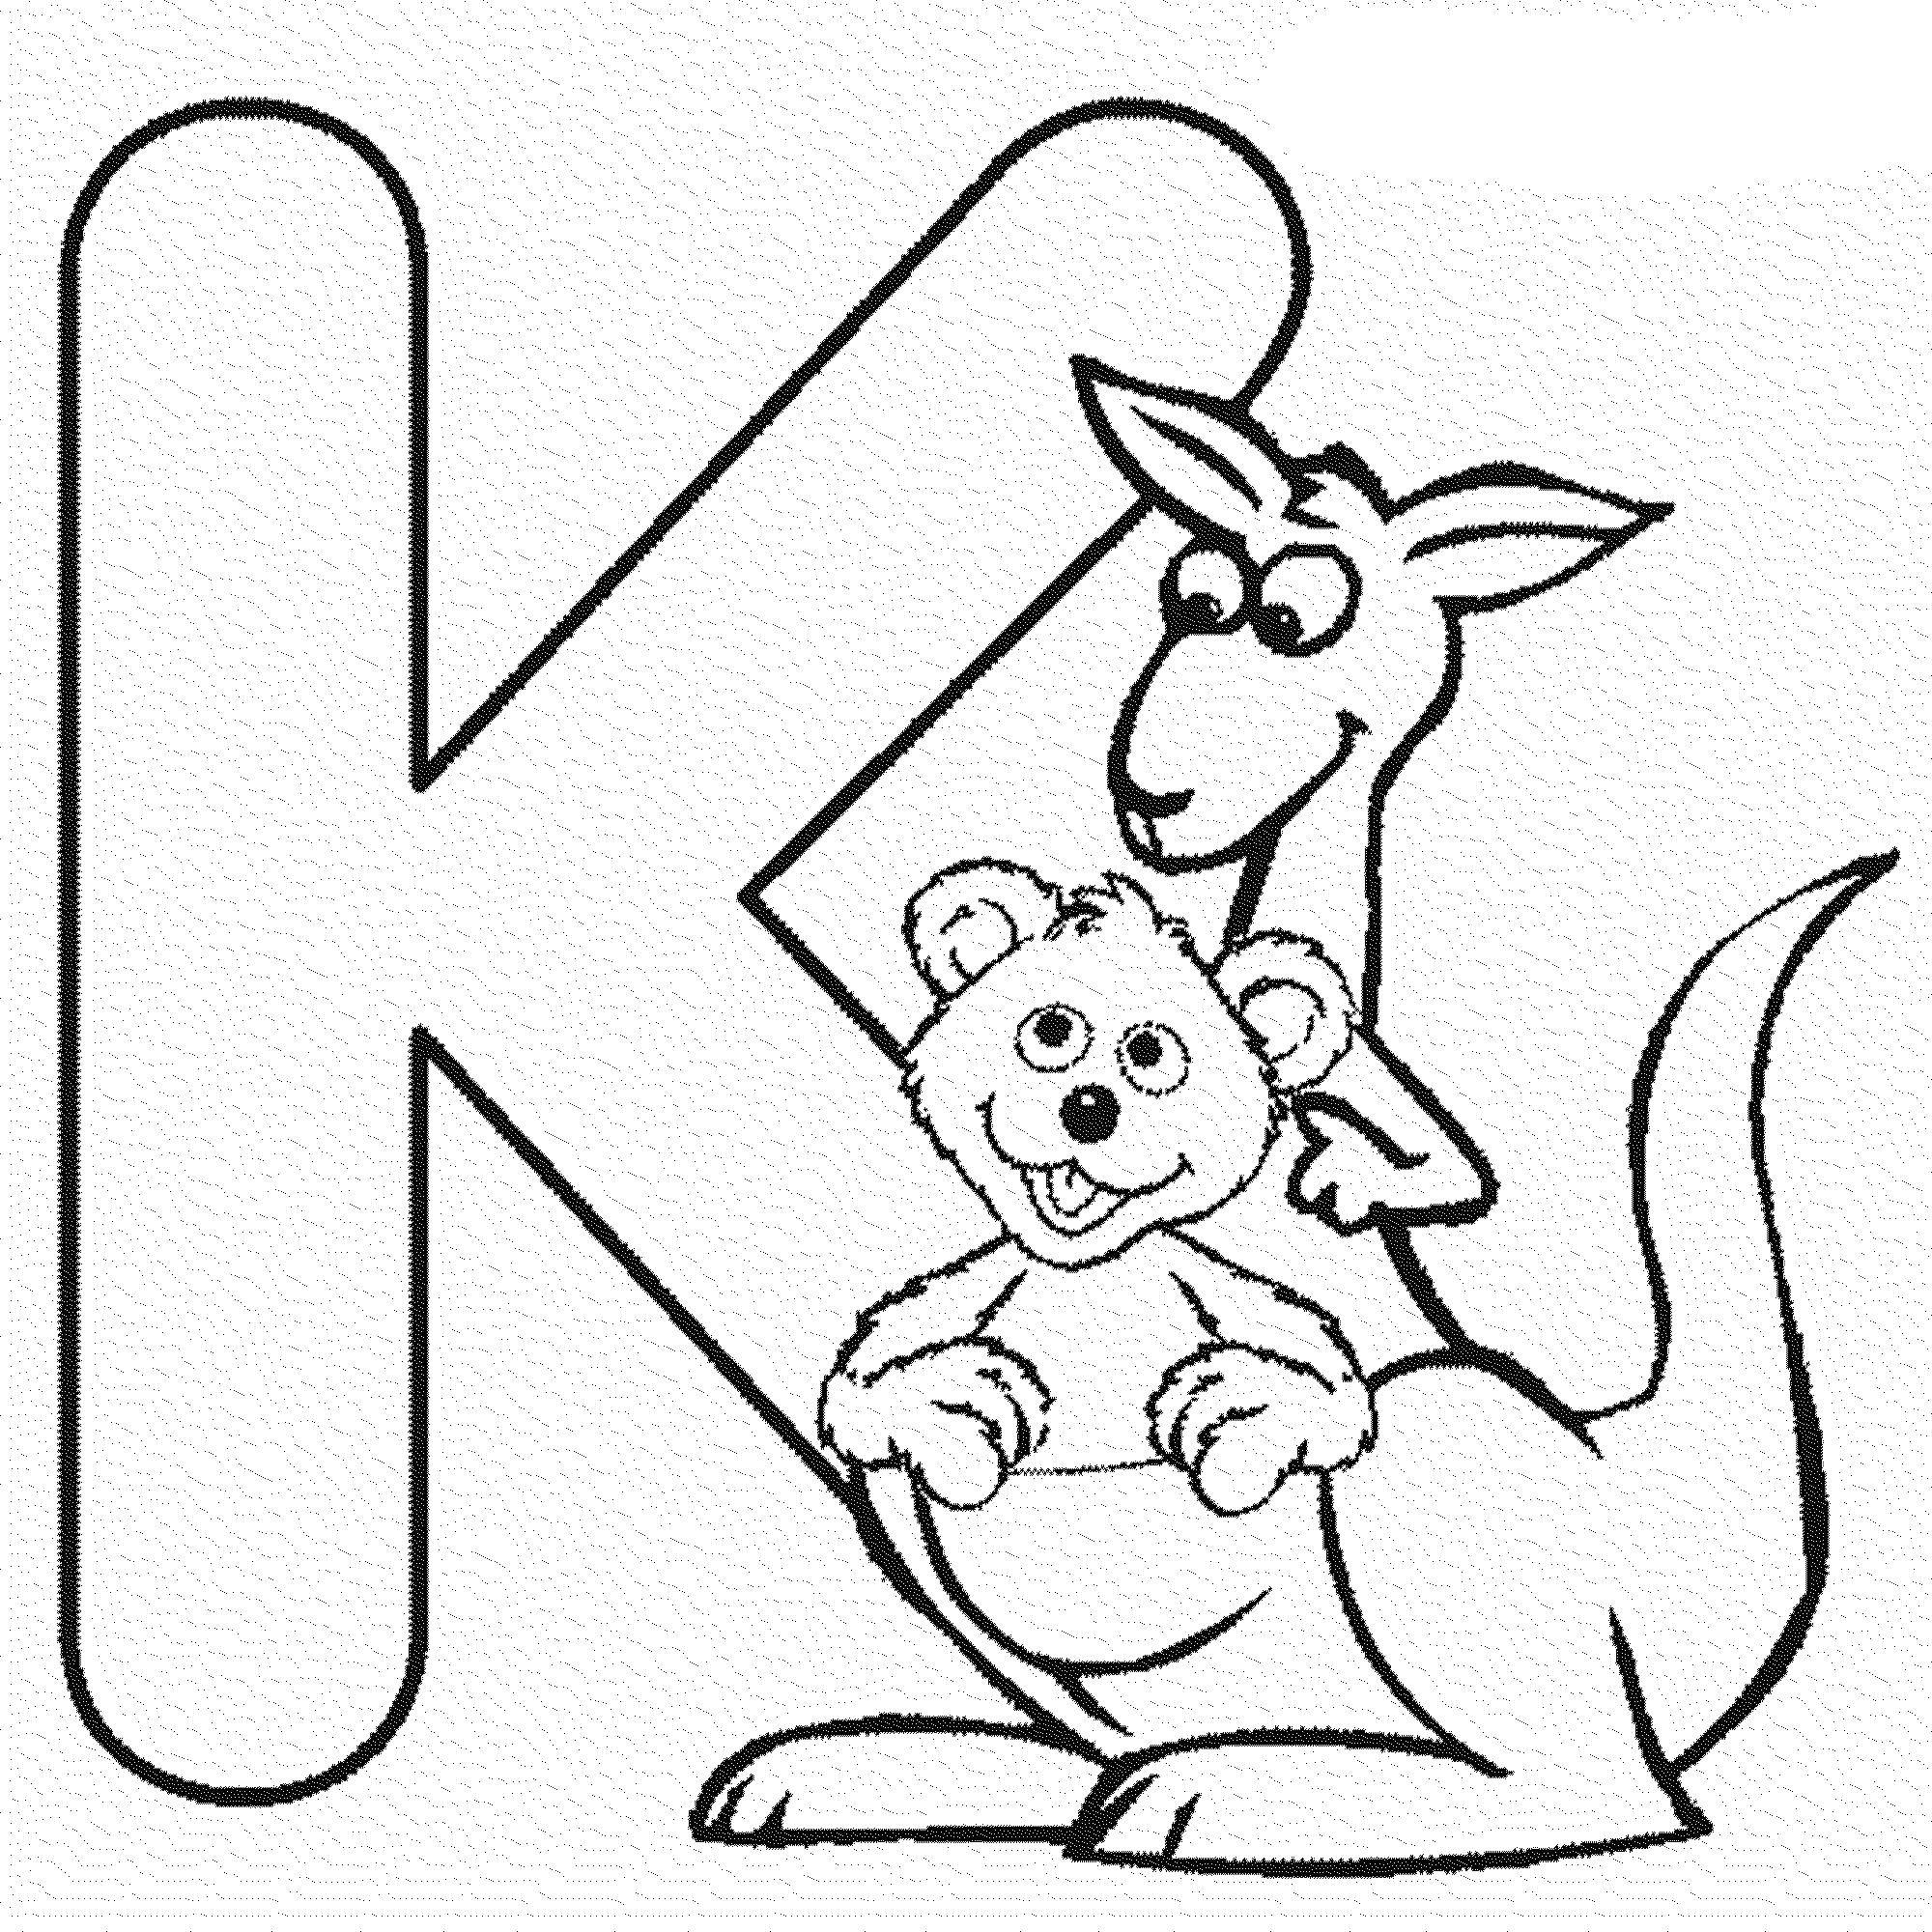 Coloring English alphabet for kangaroo. Category English alphabet. Tags:  The English alphabet, K.